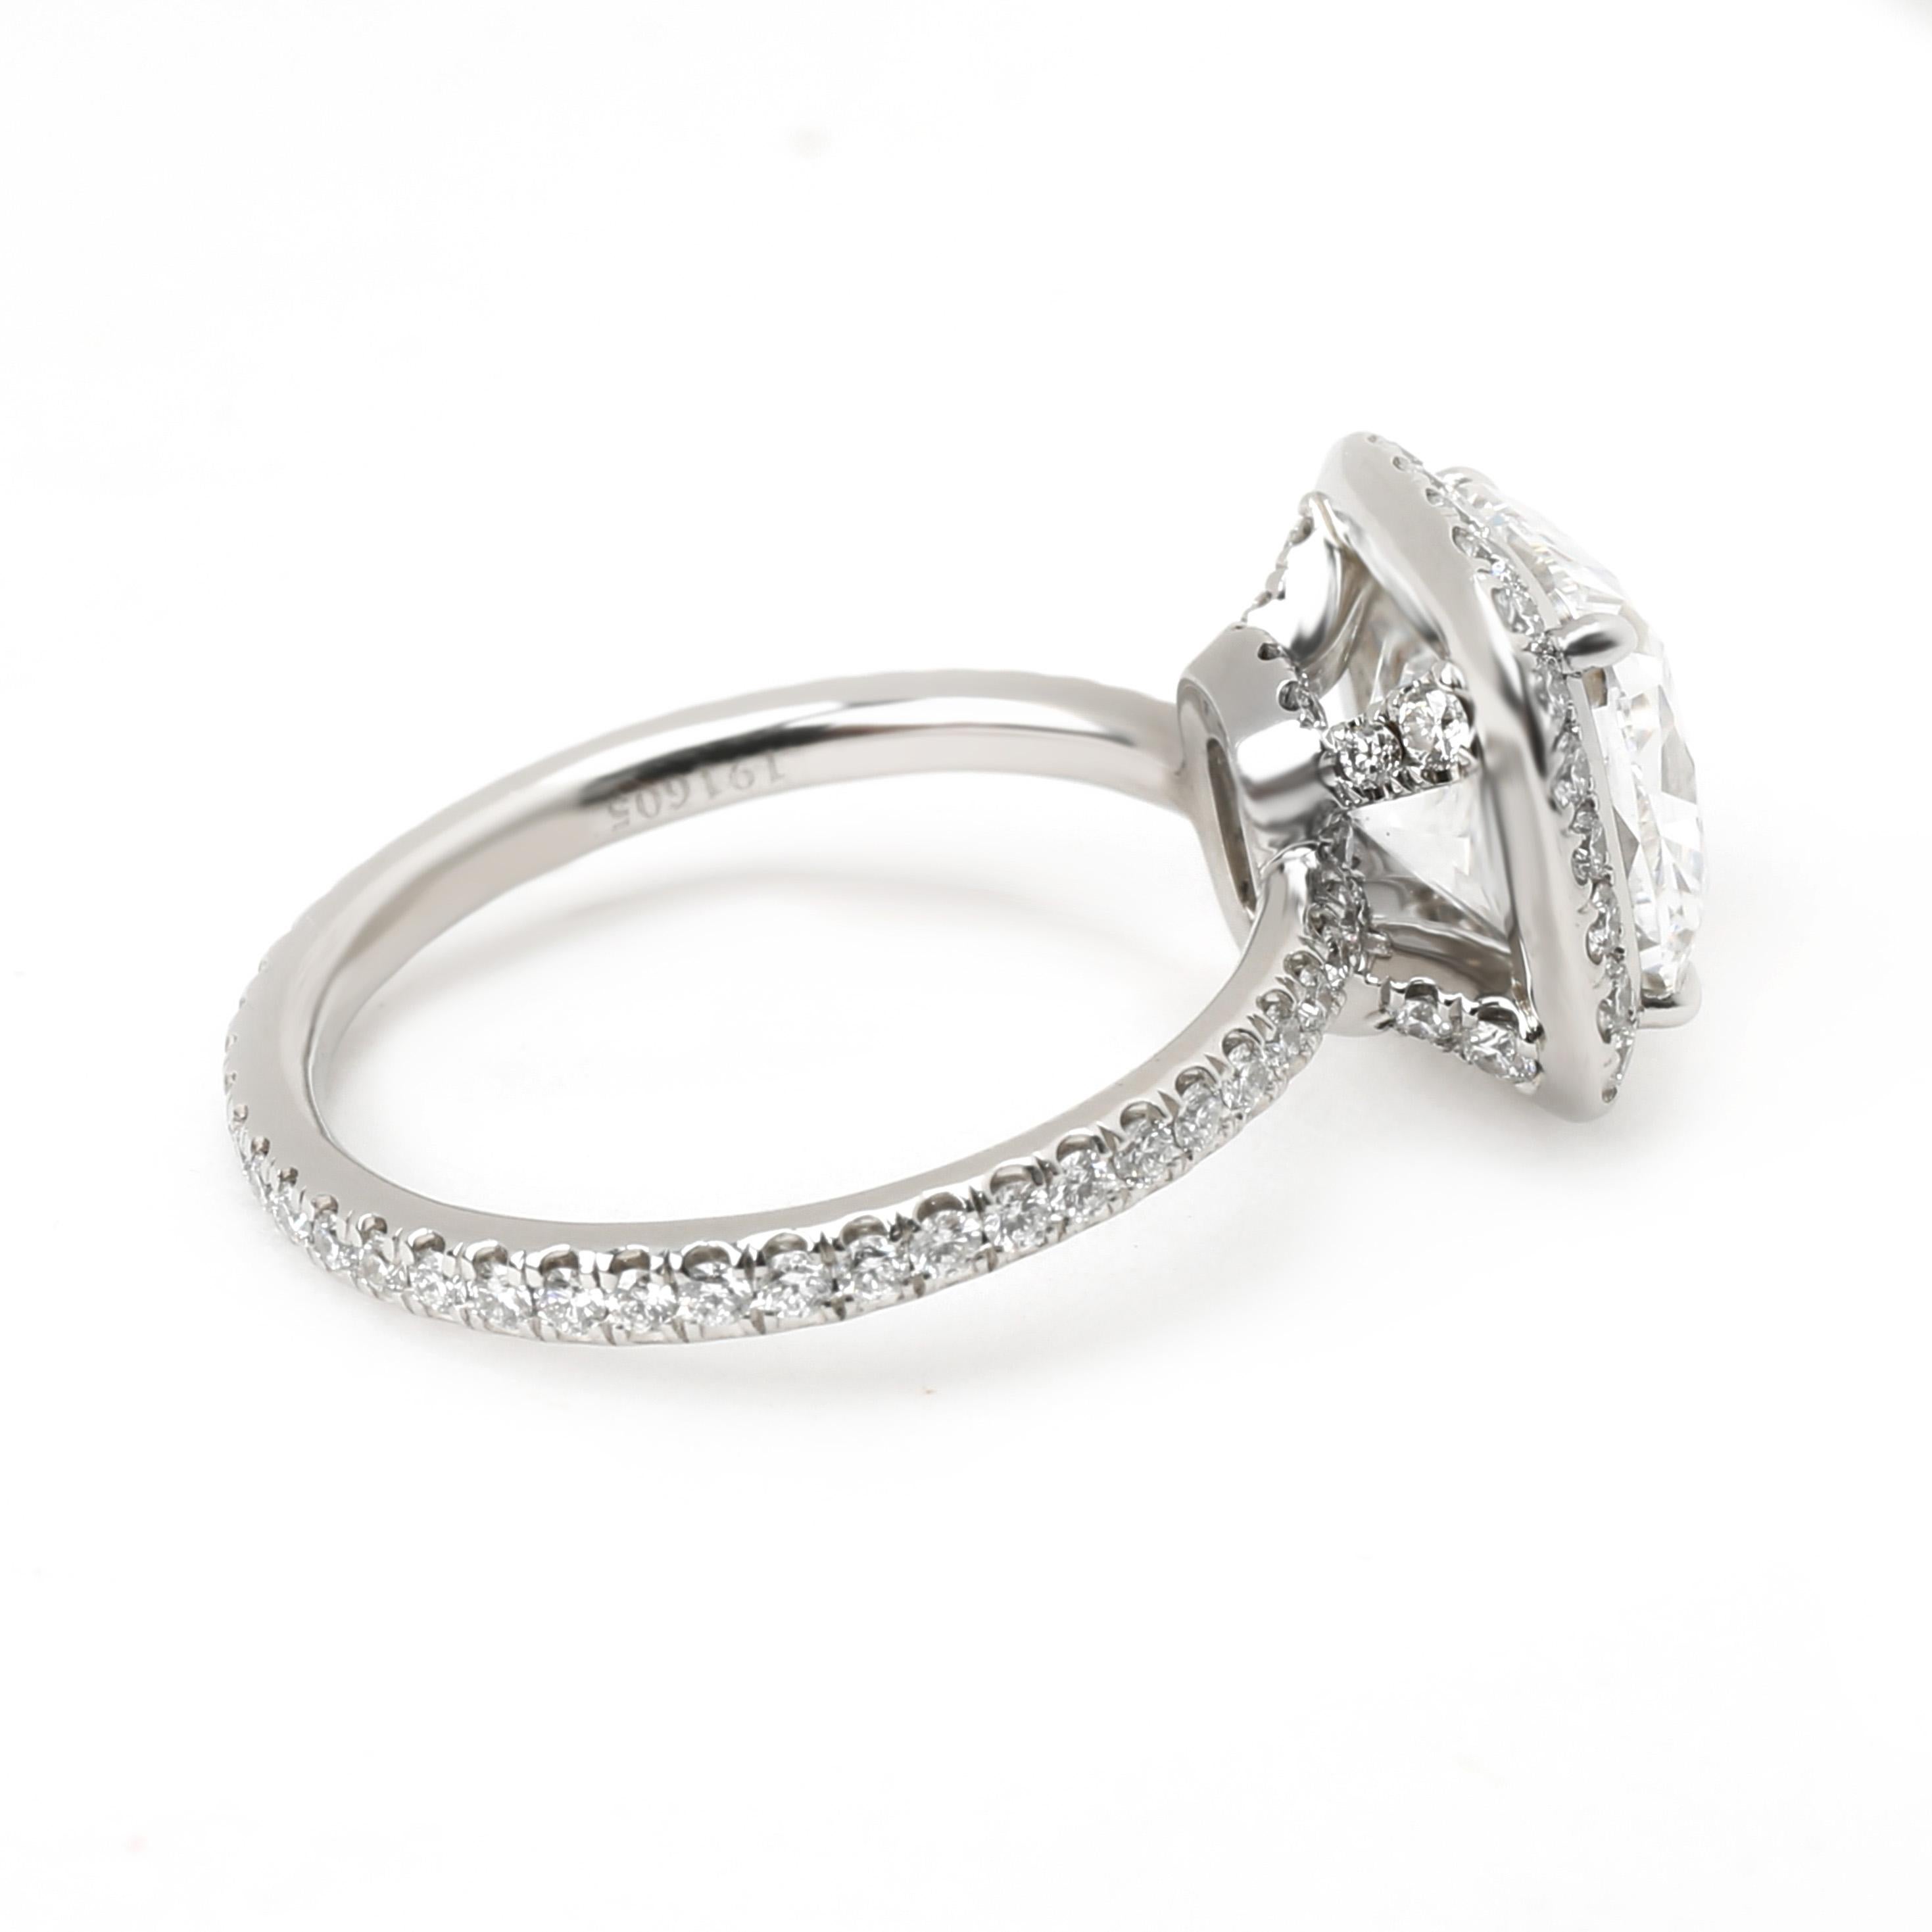 Cushion Cut Harry Winston Diamond Engagement Ring in Platinum '2.66 Carat Cushion D/VVS2'